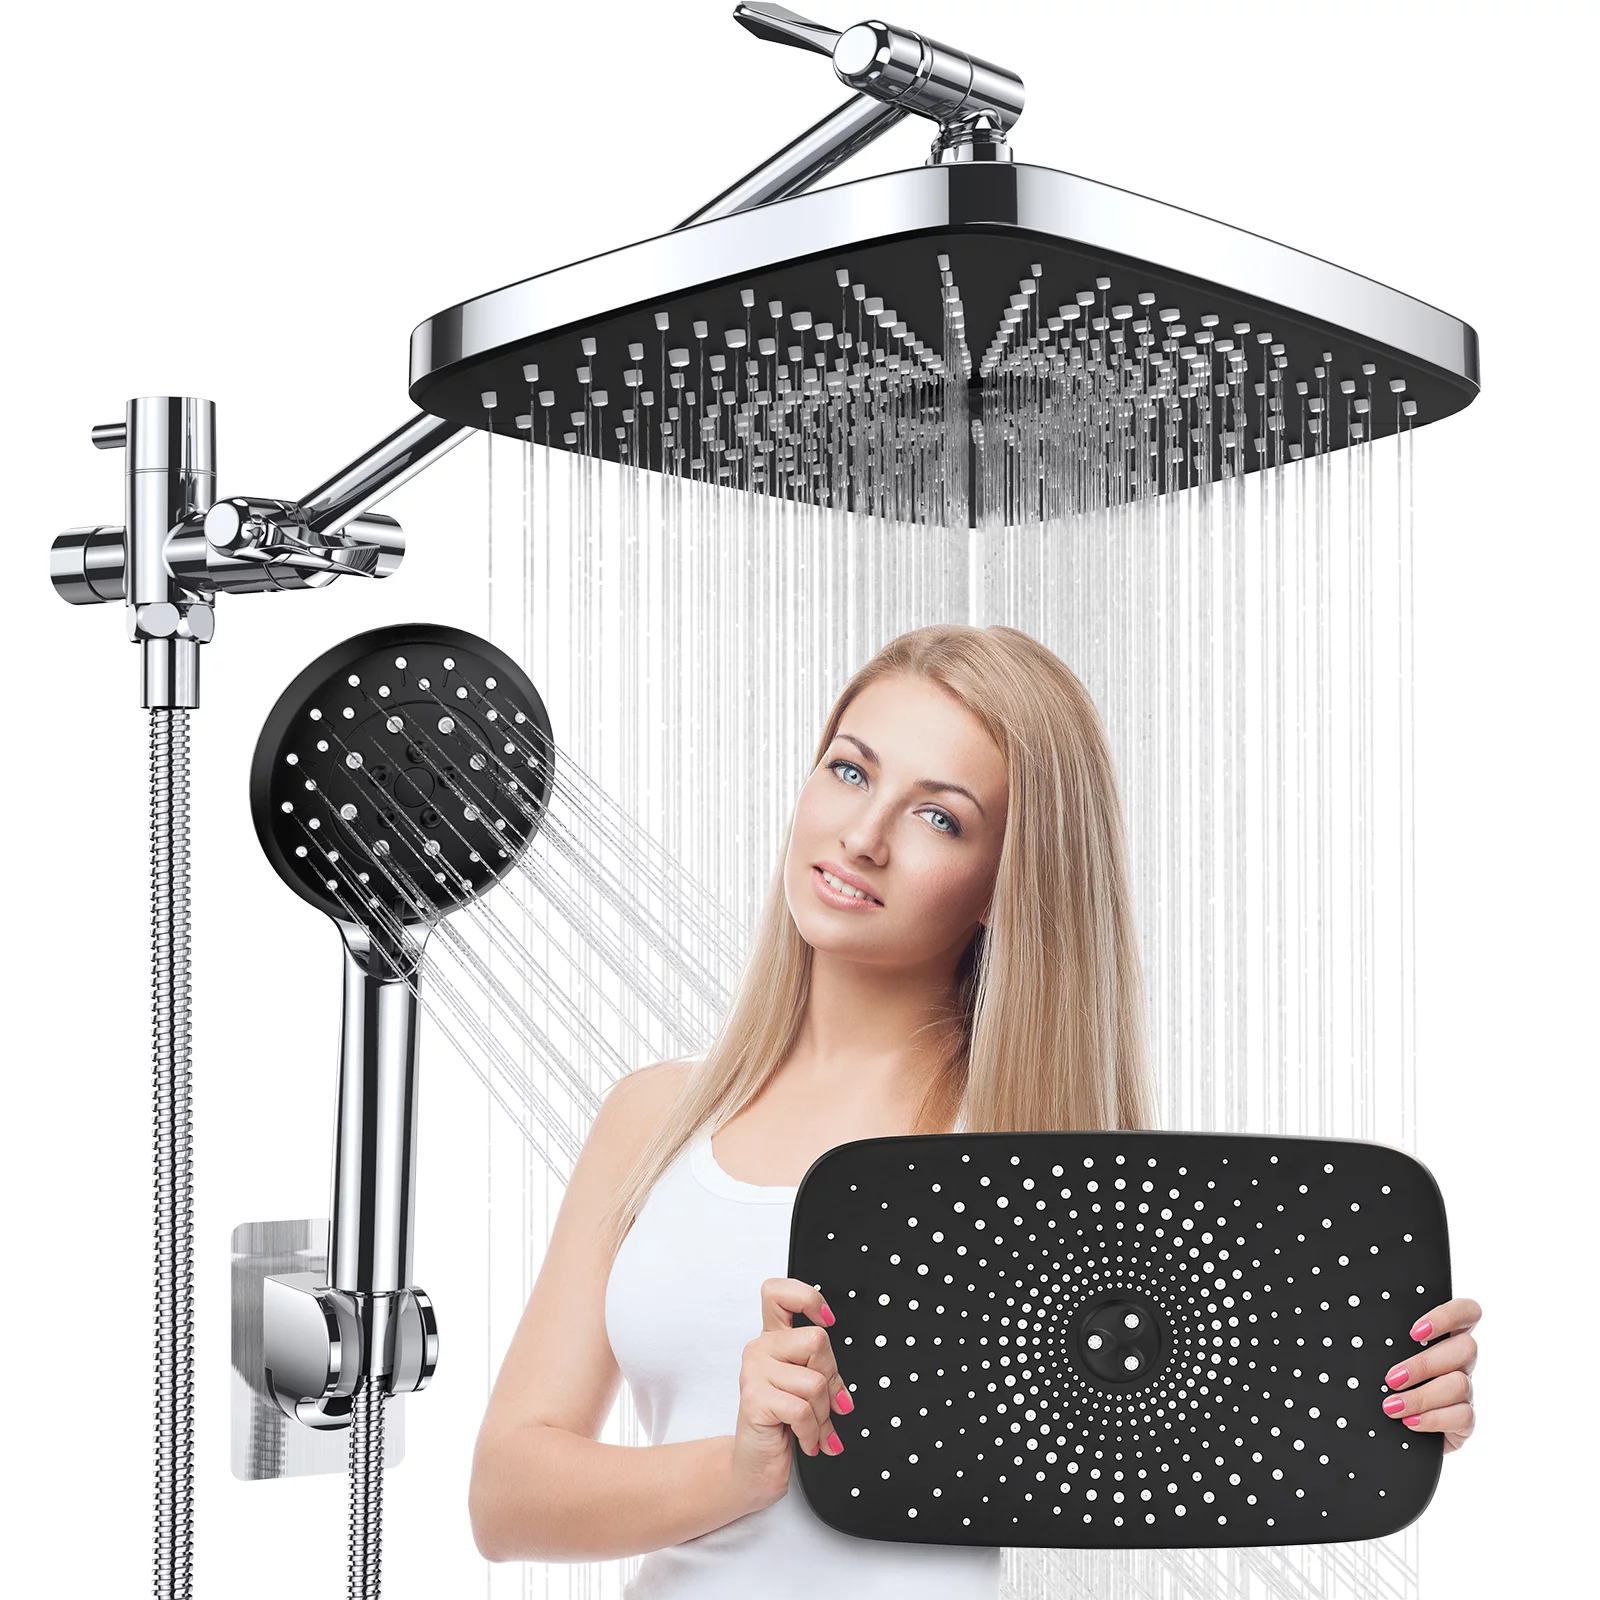 Veken 5-Setting Shower Head, 12 inch Rain Shower Head with Handheld and 70 inch Anti-Tangle Hose, Chrome